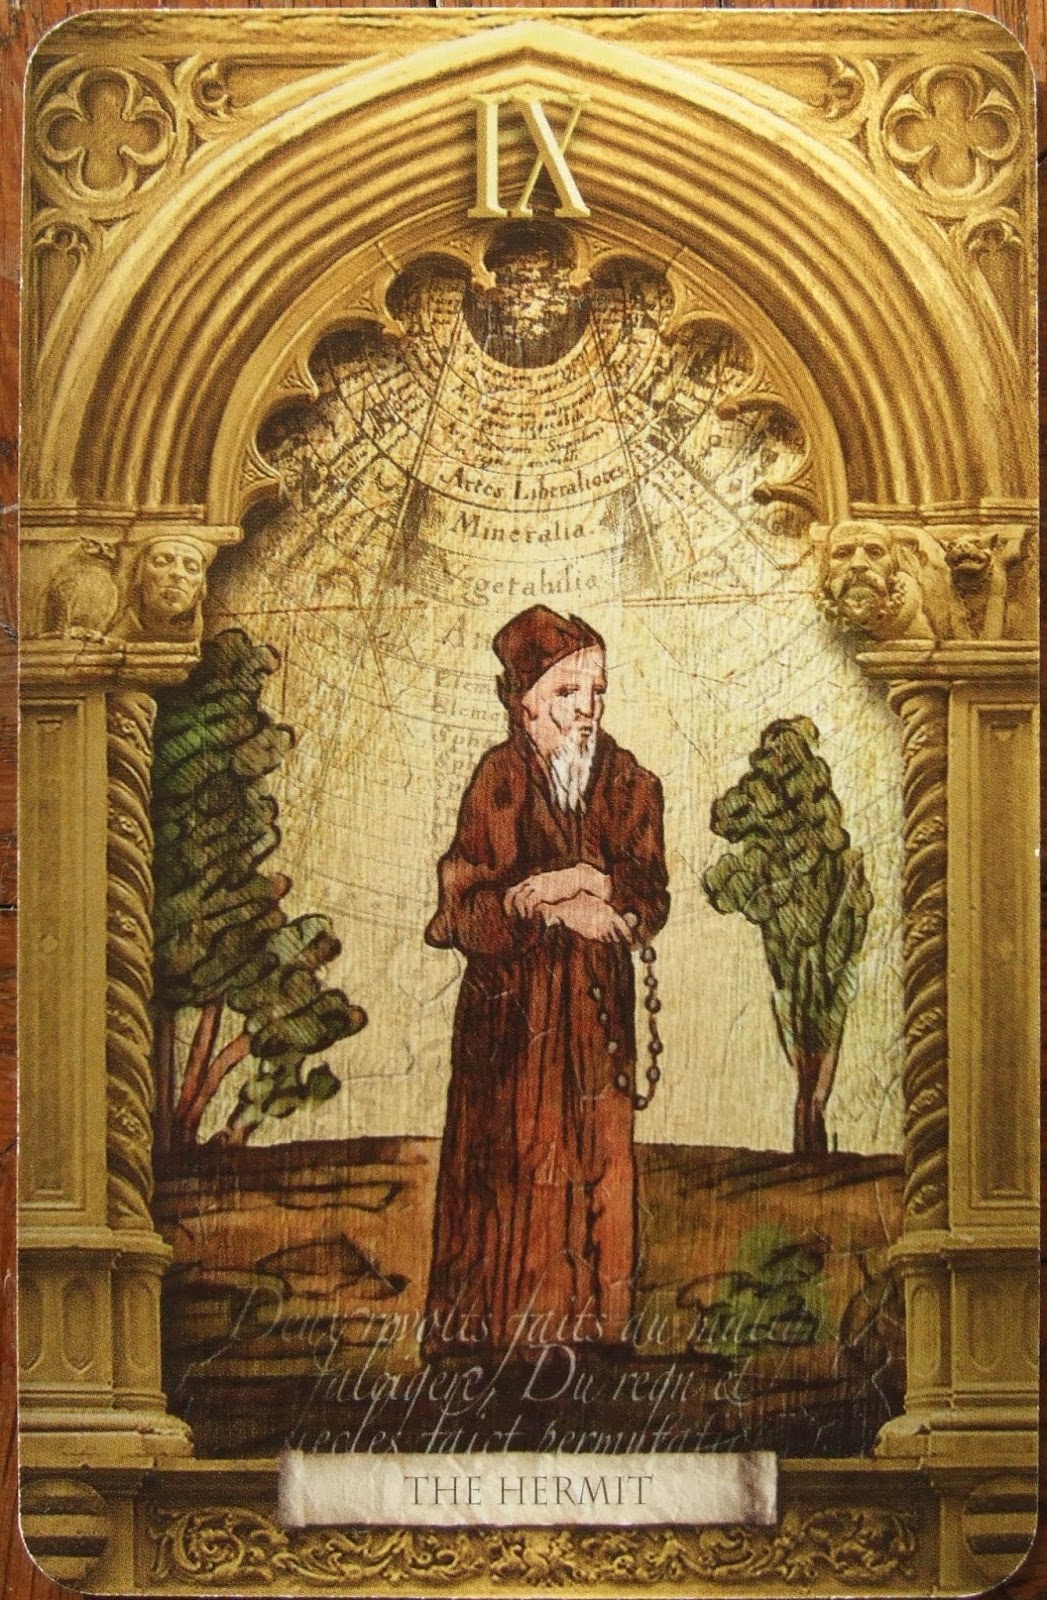 The Lost Tarot of Nostradamus